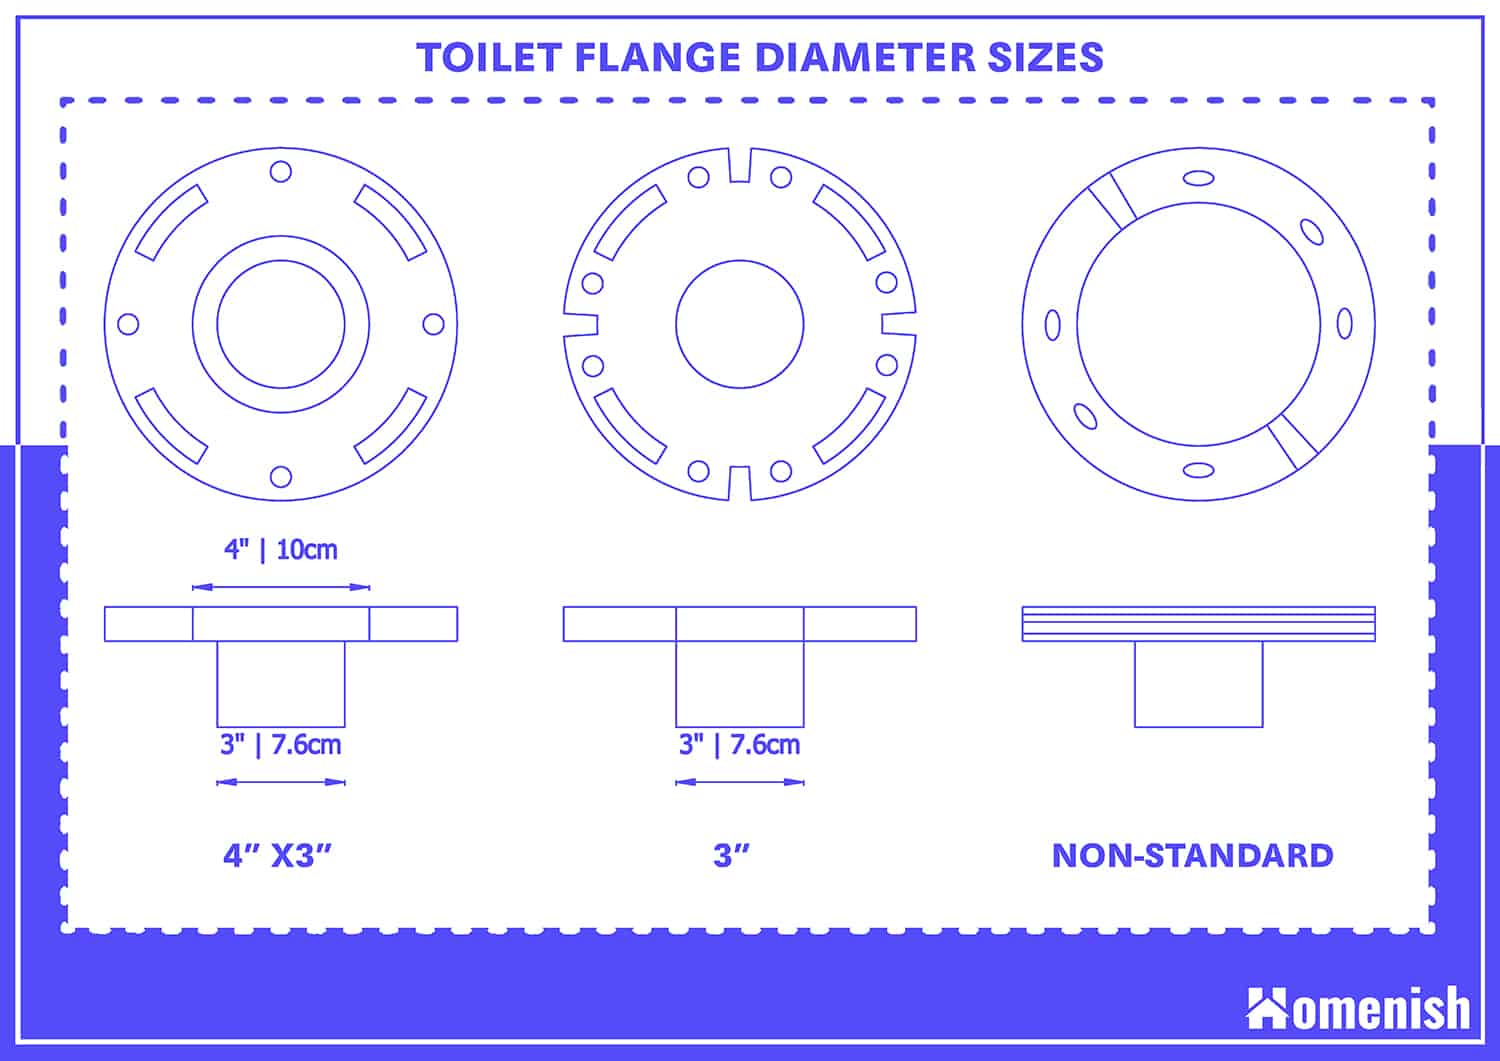 Toilet Flange Diameter Sizes